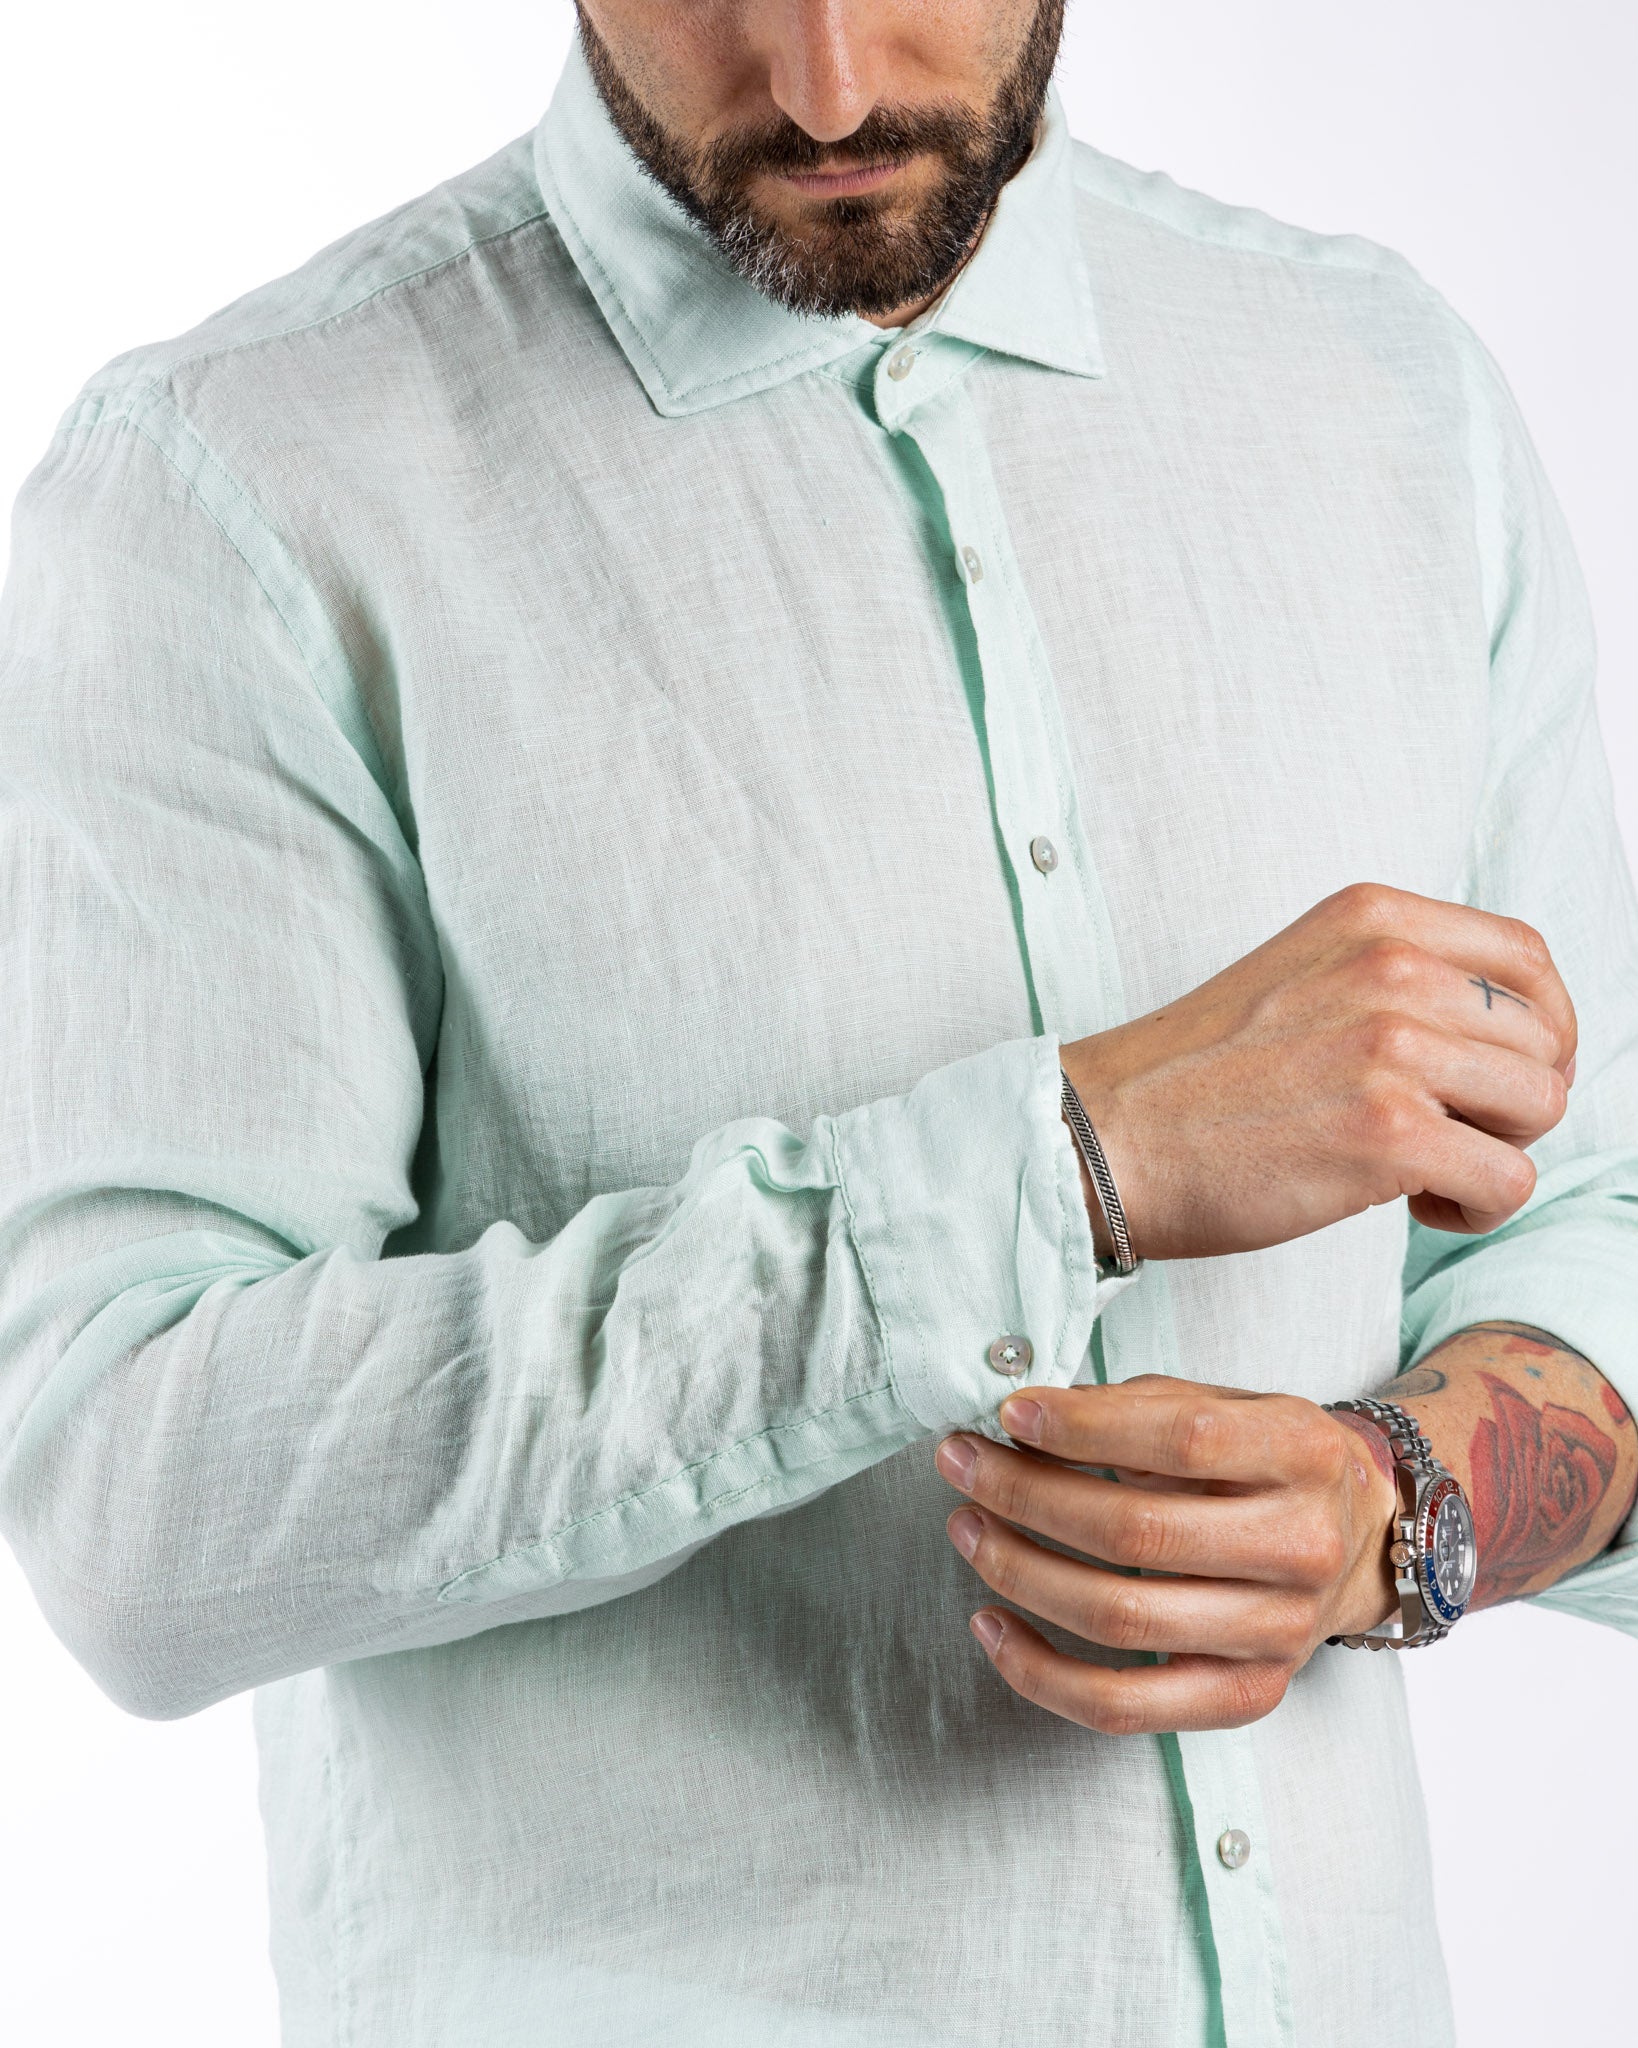 Montecarlo - teal pure linen shirt